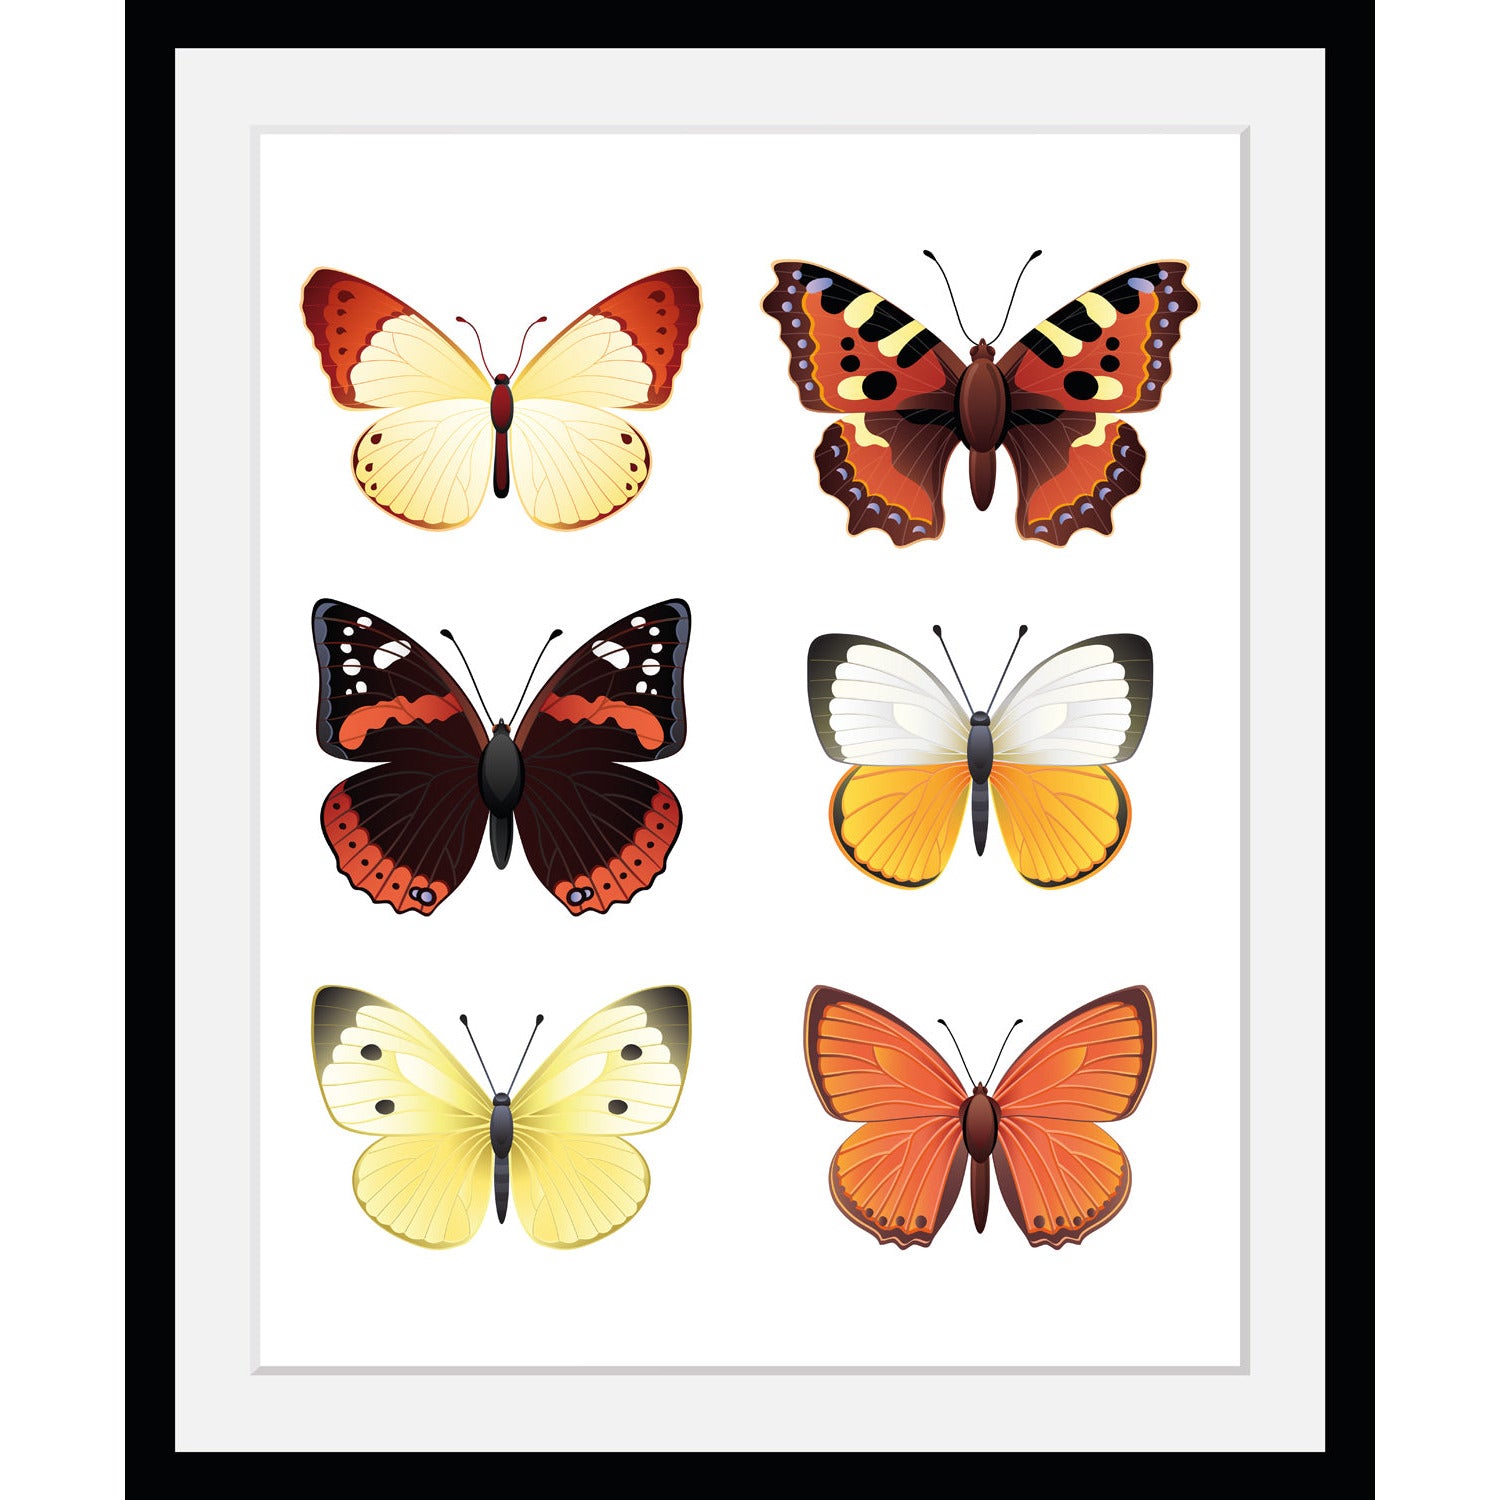 Rahmenbild - Collection of butterflies